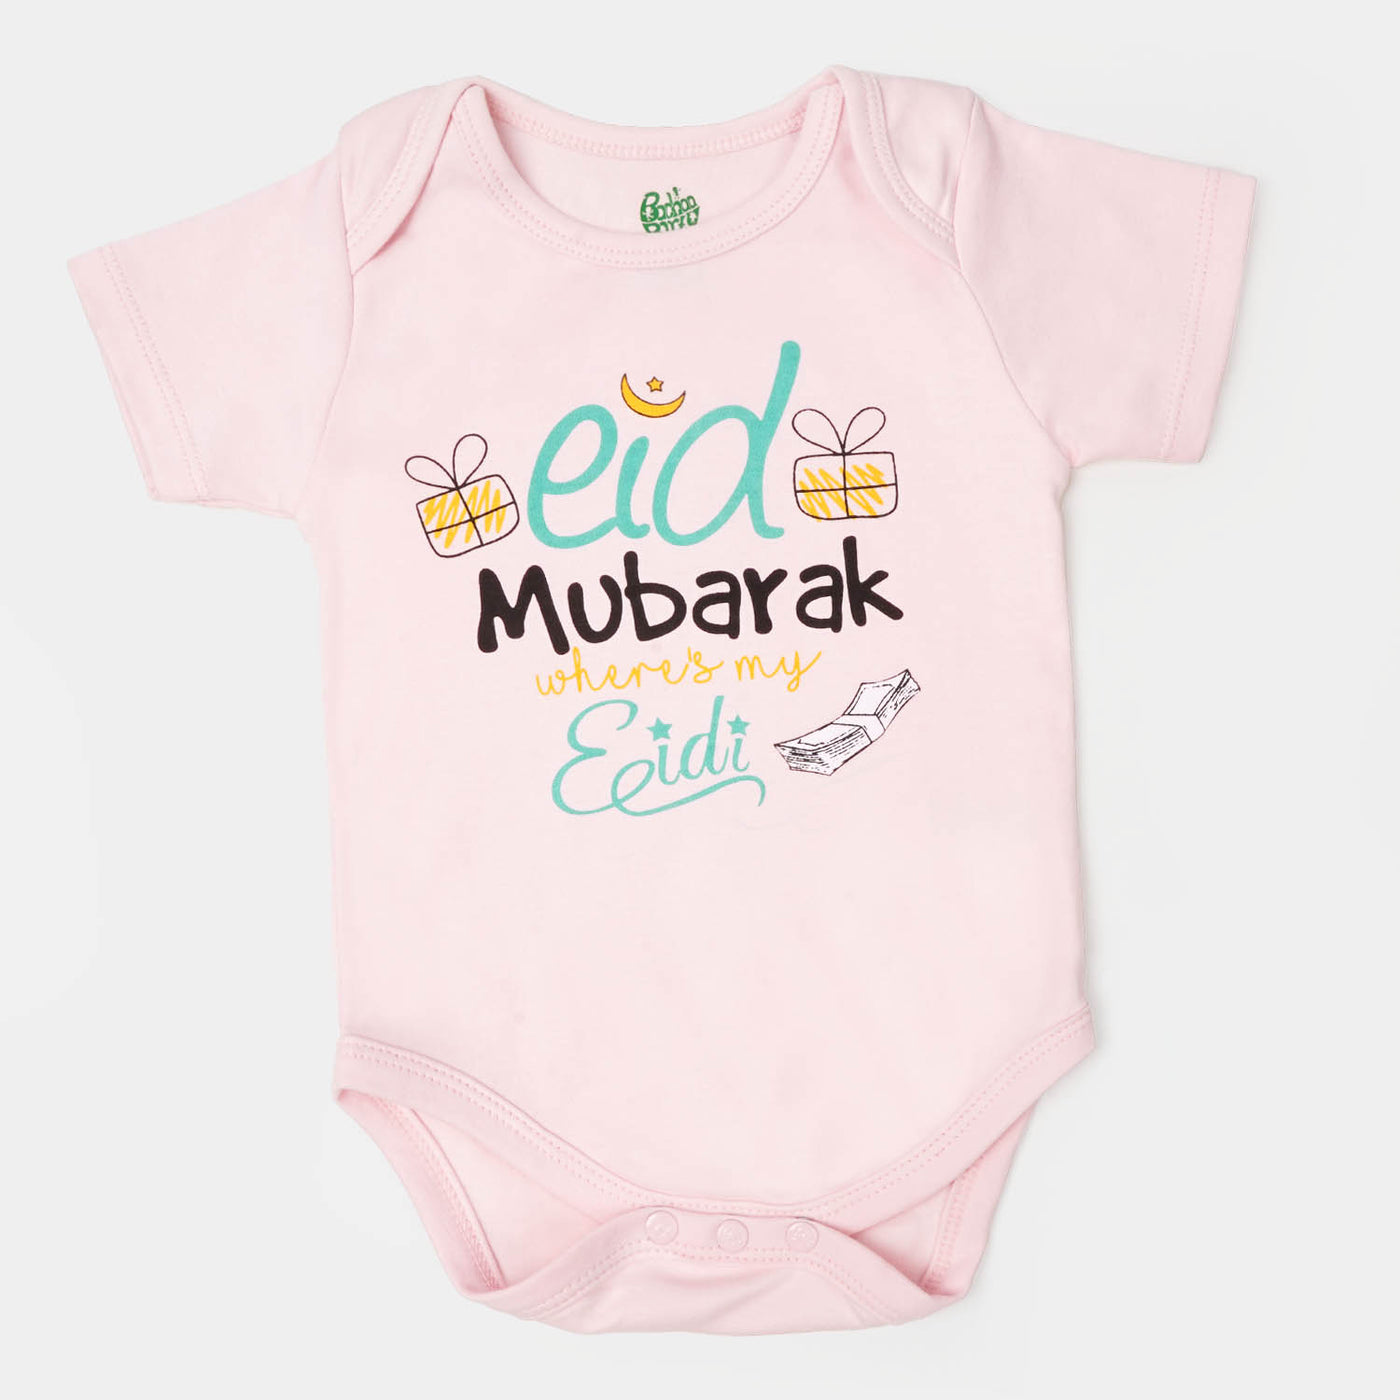 Infant Unisex Cotton Romper Eid Mubarak - Pink